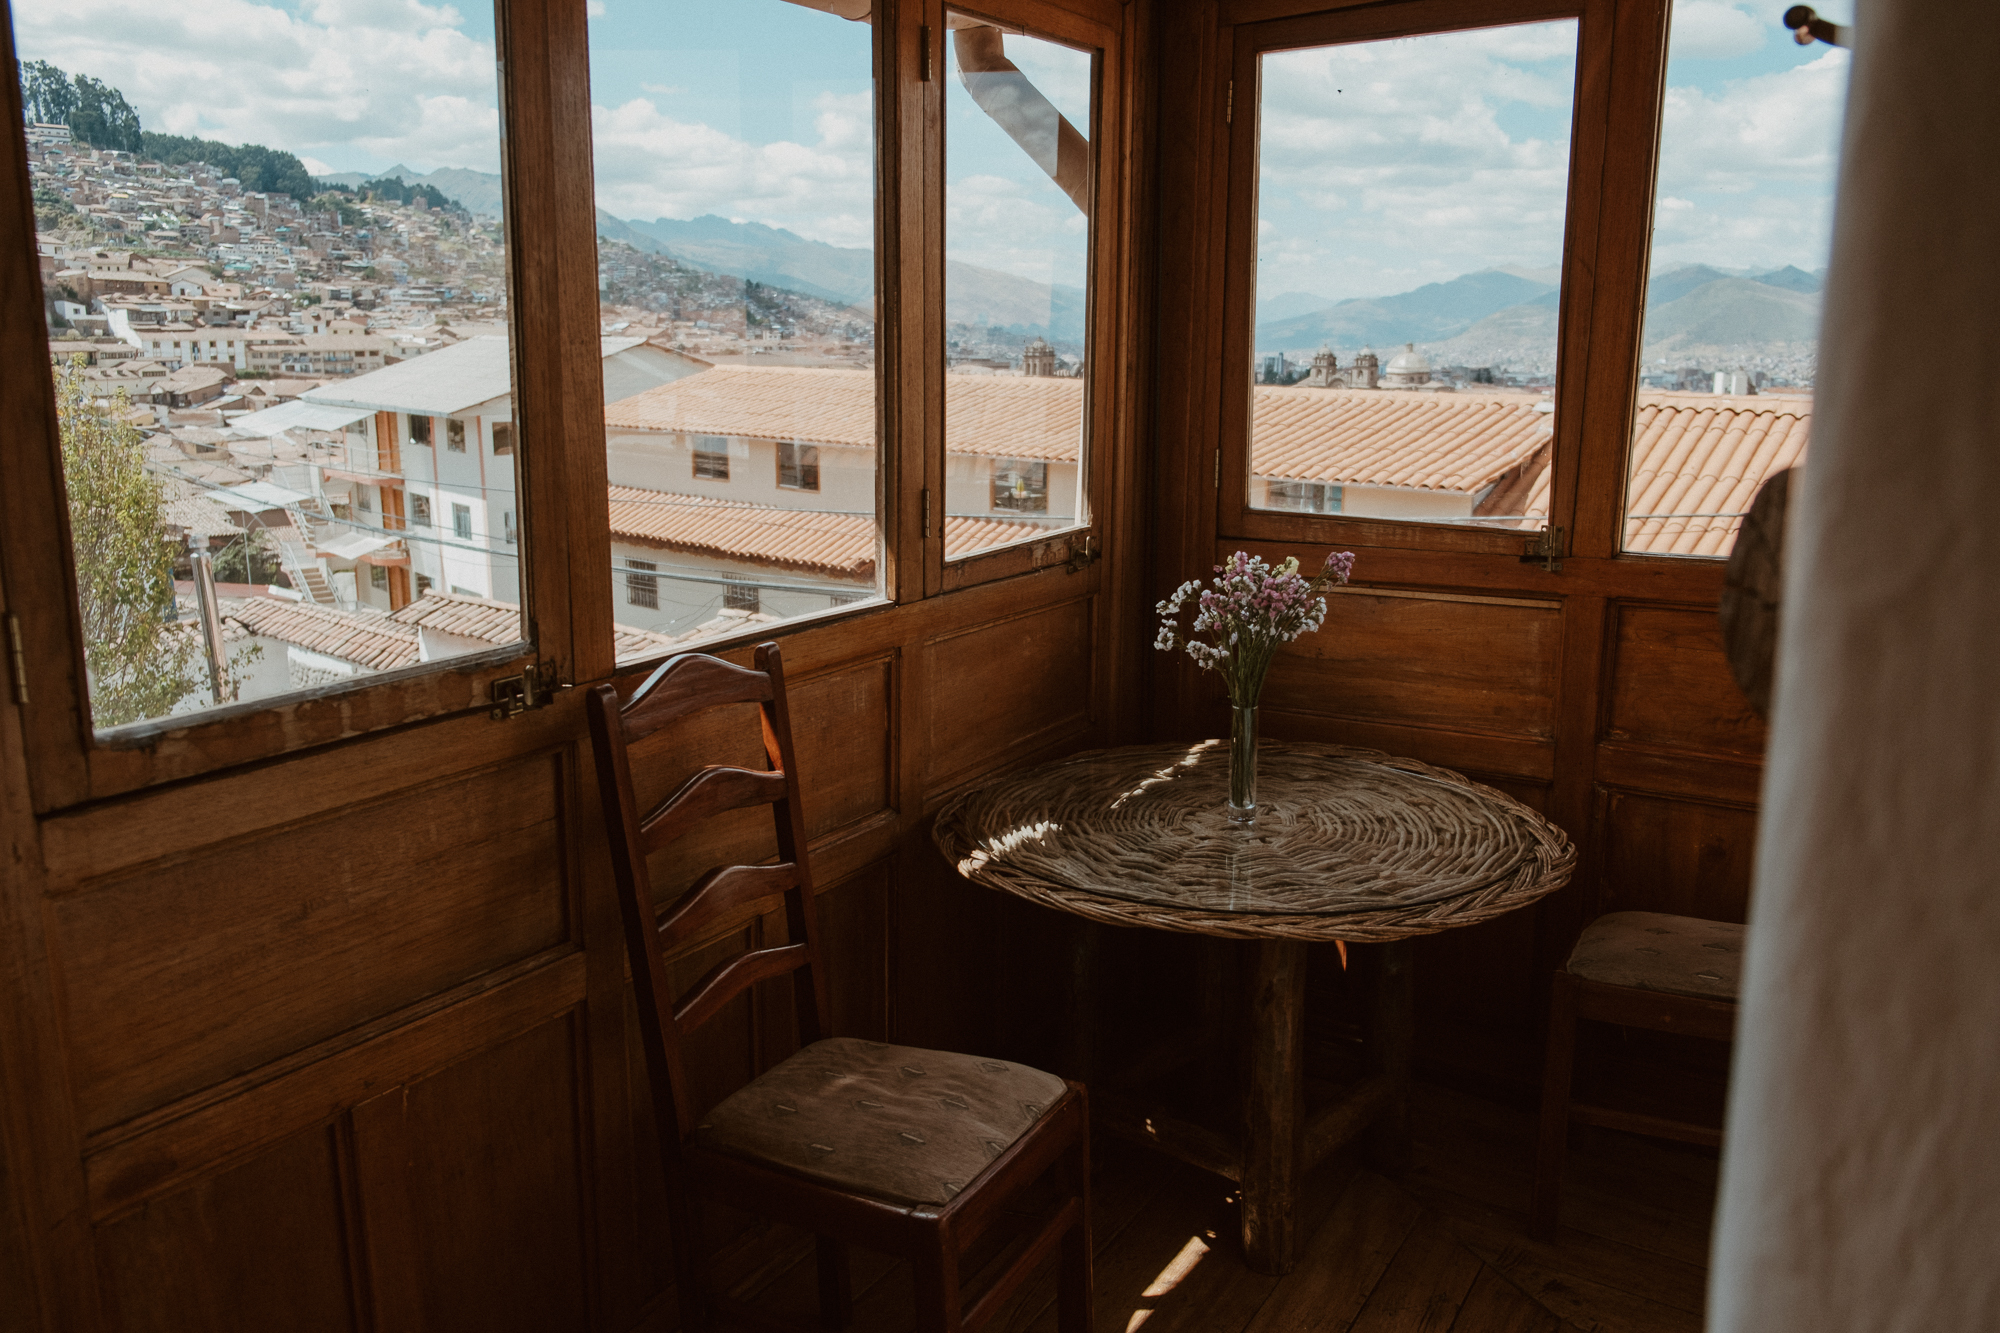 Window view from a balcony in Cusco, Peru